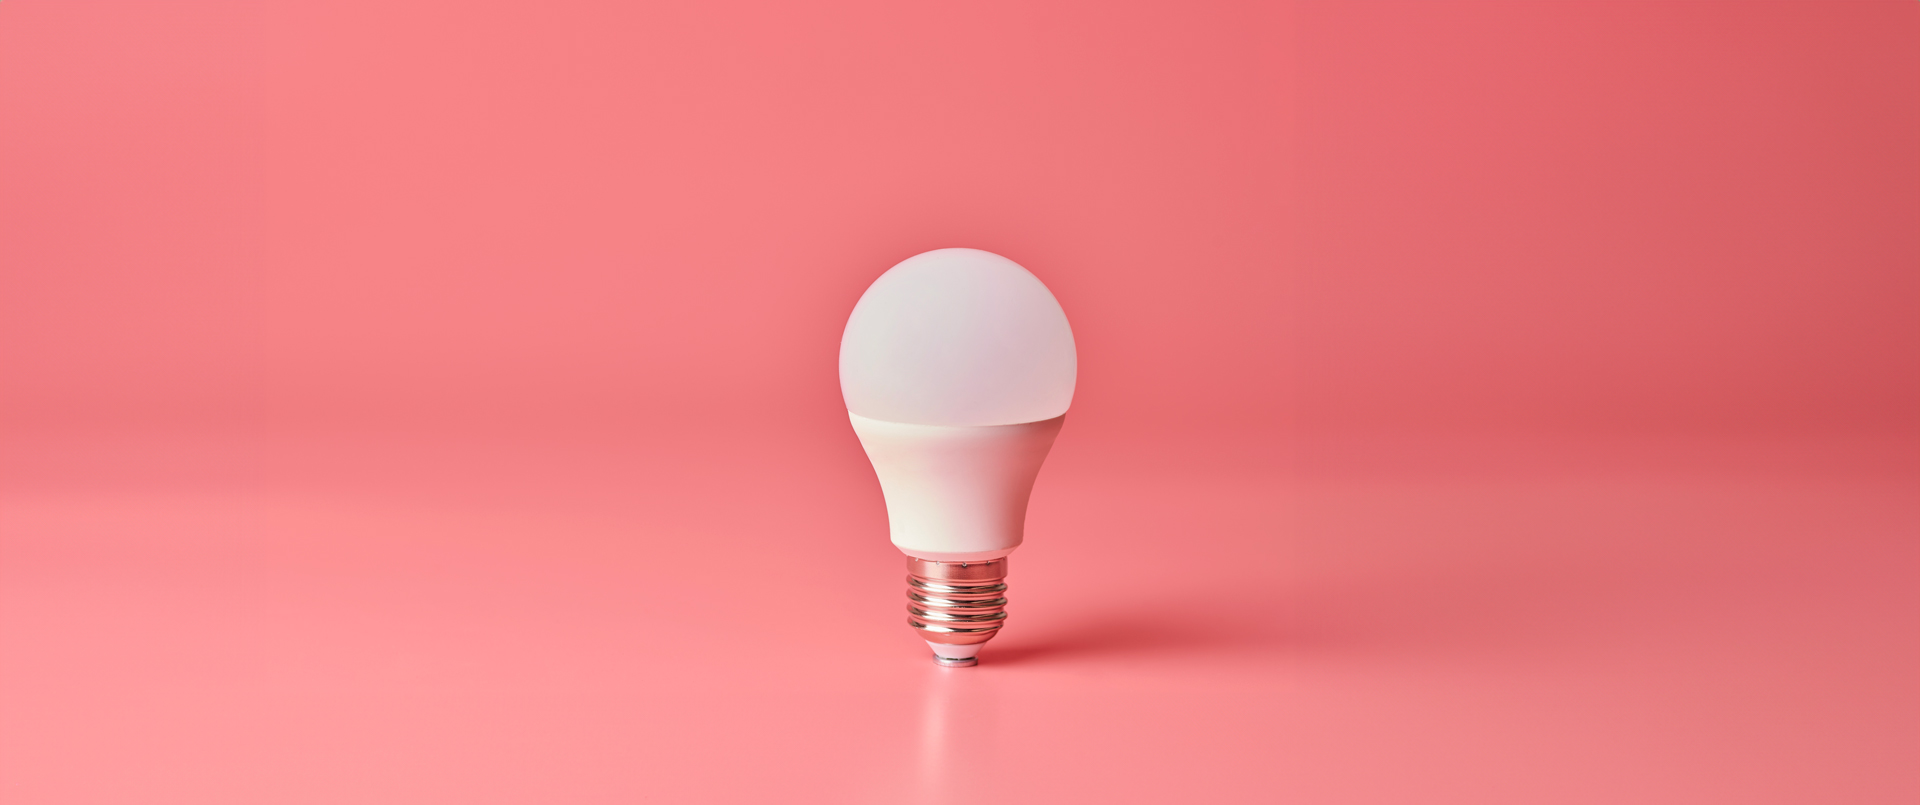 Energy Saving Light Bulb Copy Space Pink Backgro 2023 11 27 05 27 54 Utc